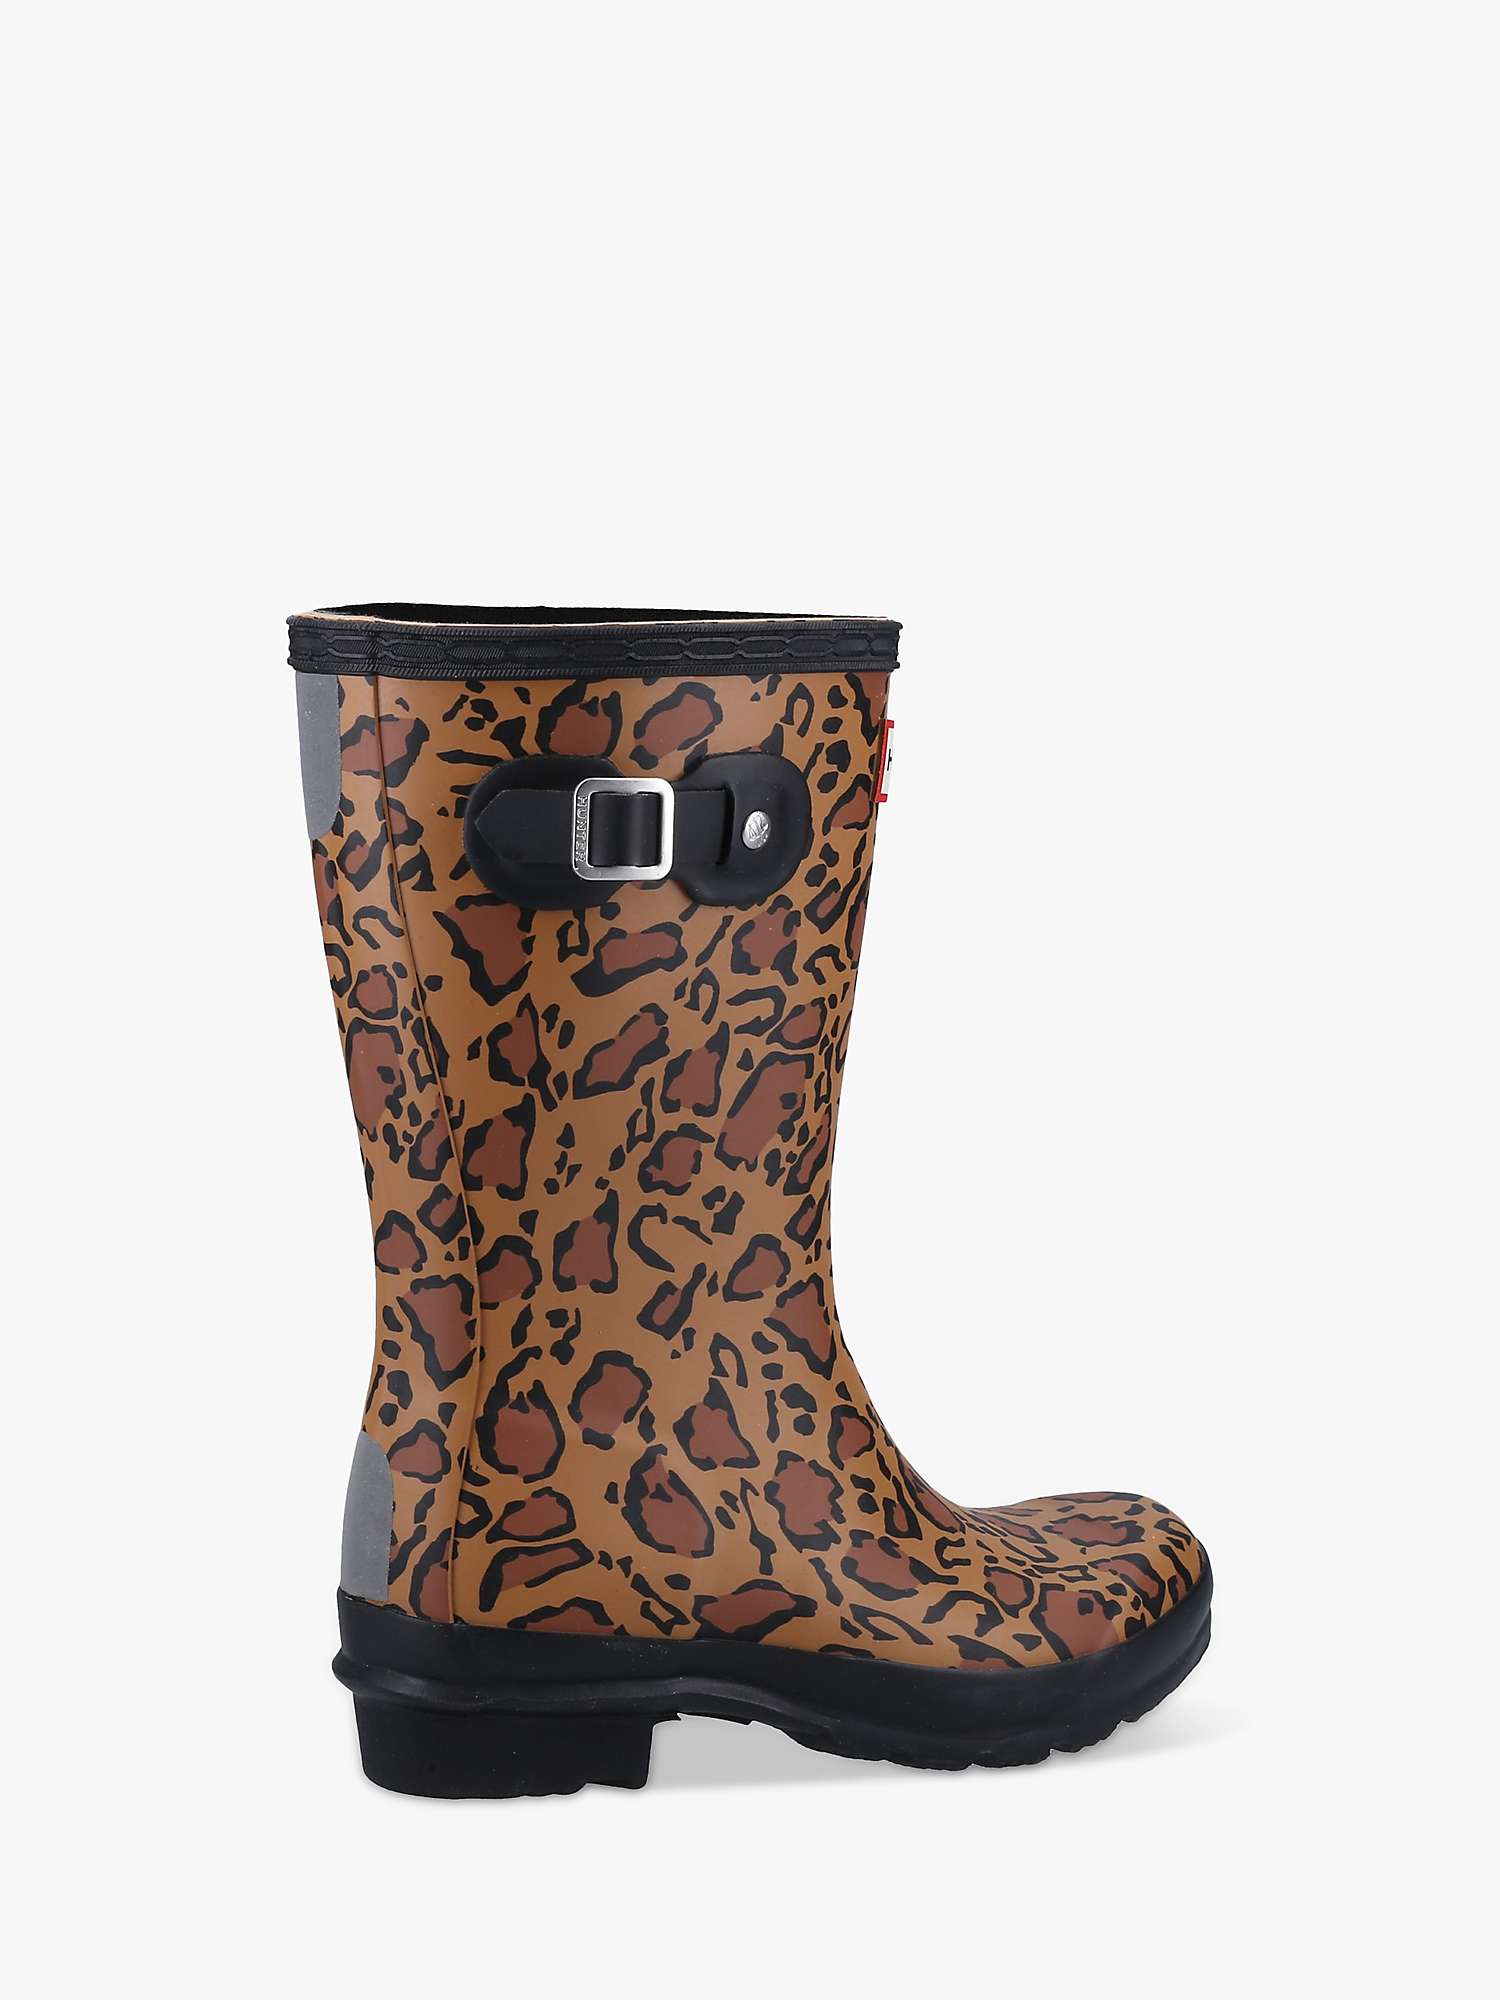 Buy Hunter Kids' Original Leopard Print Wellington Boots Online at johnlewis.com